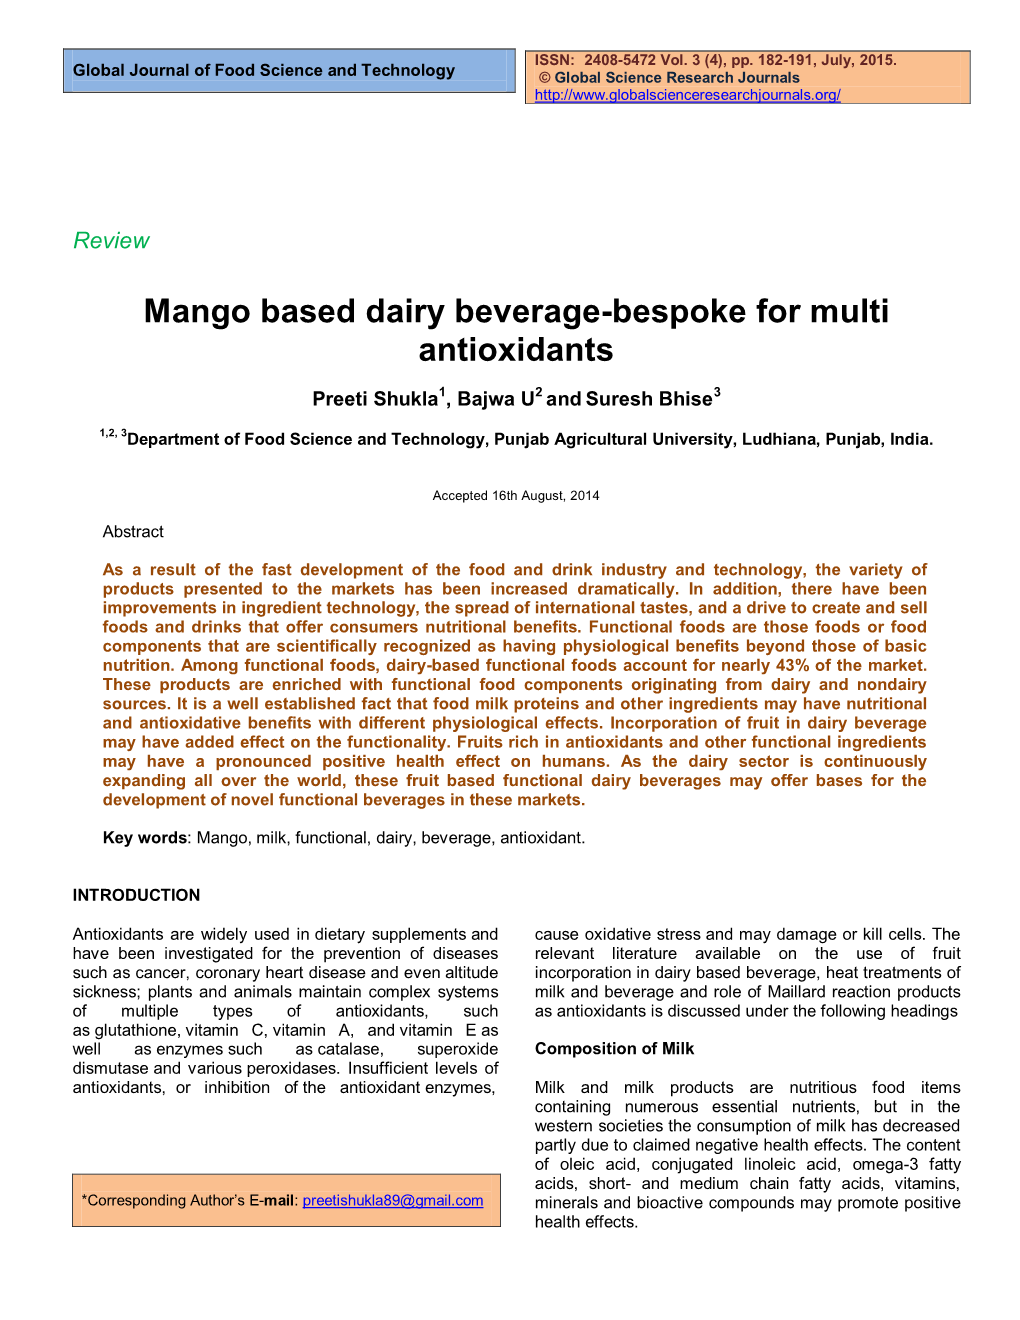 Mango Based Dairy Beverage-Bespoke for Multi Antioxidants